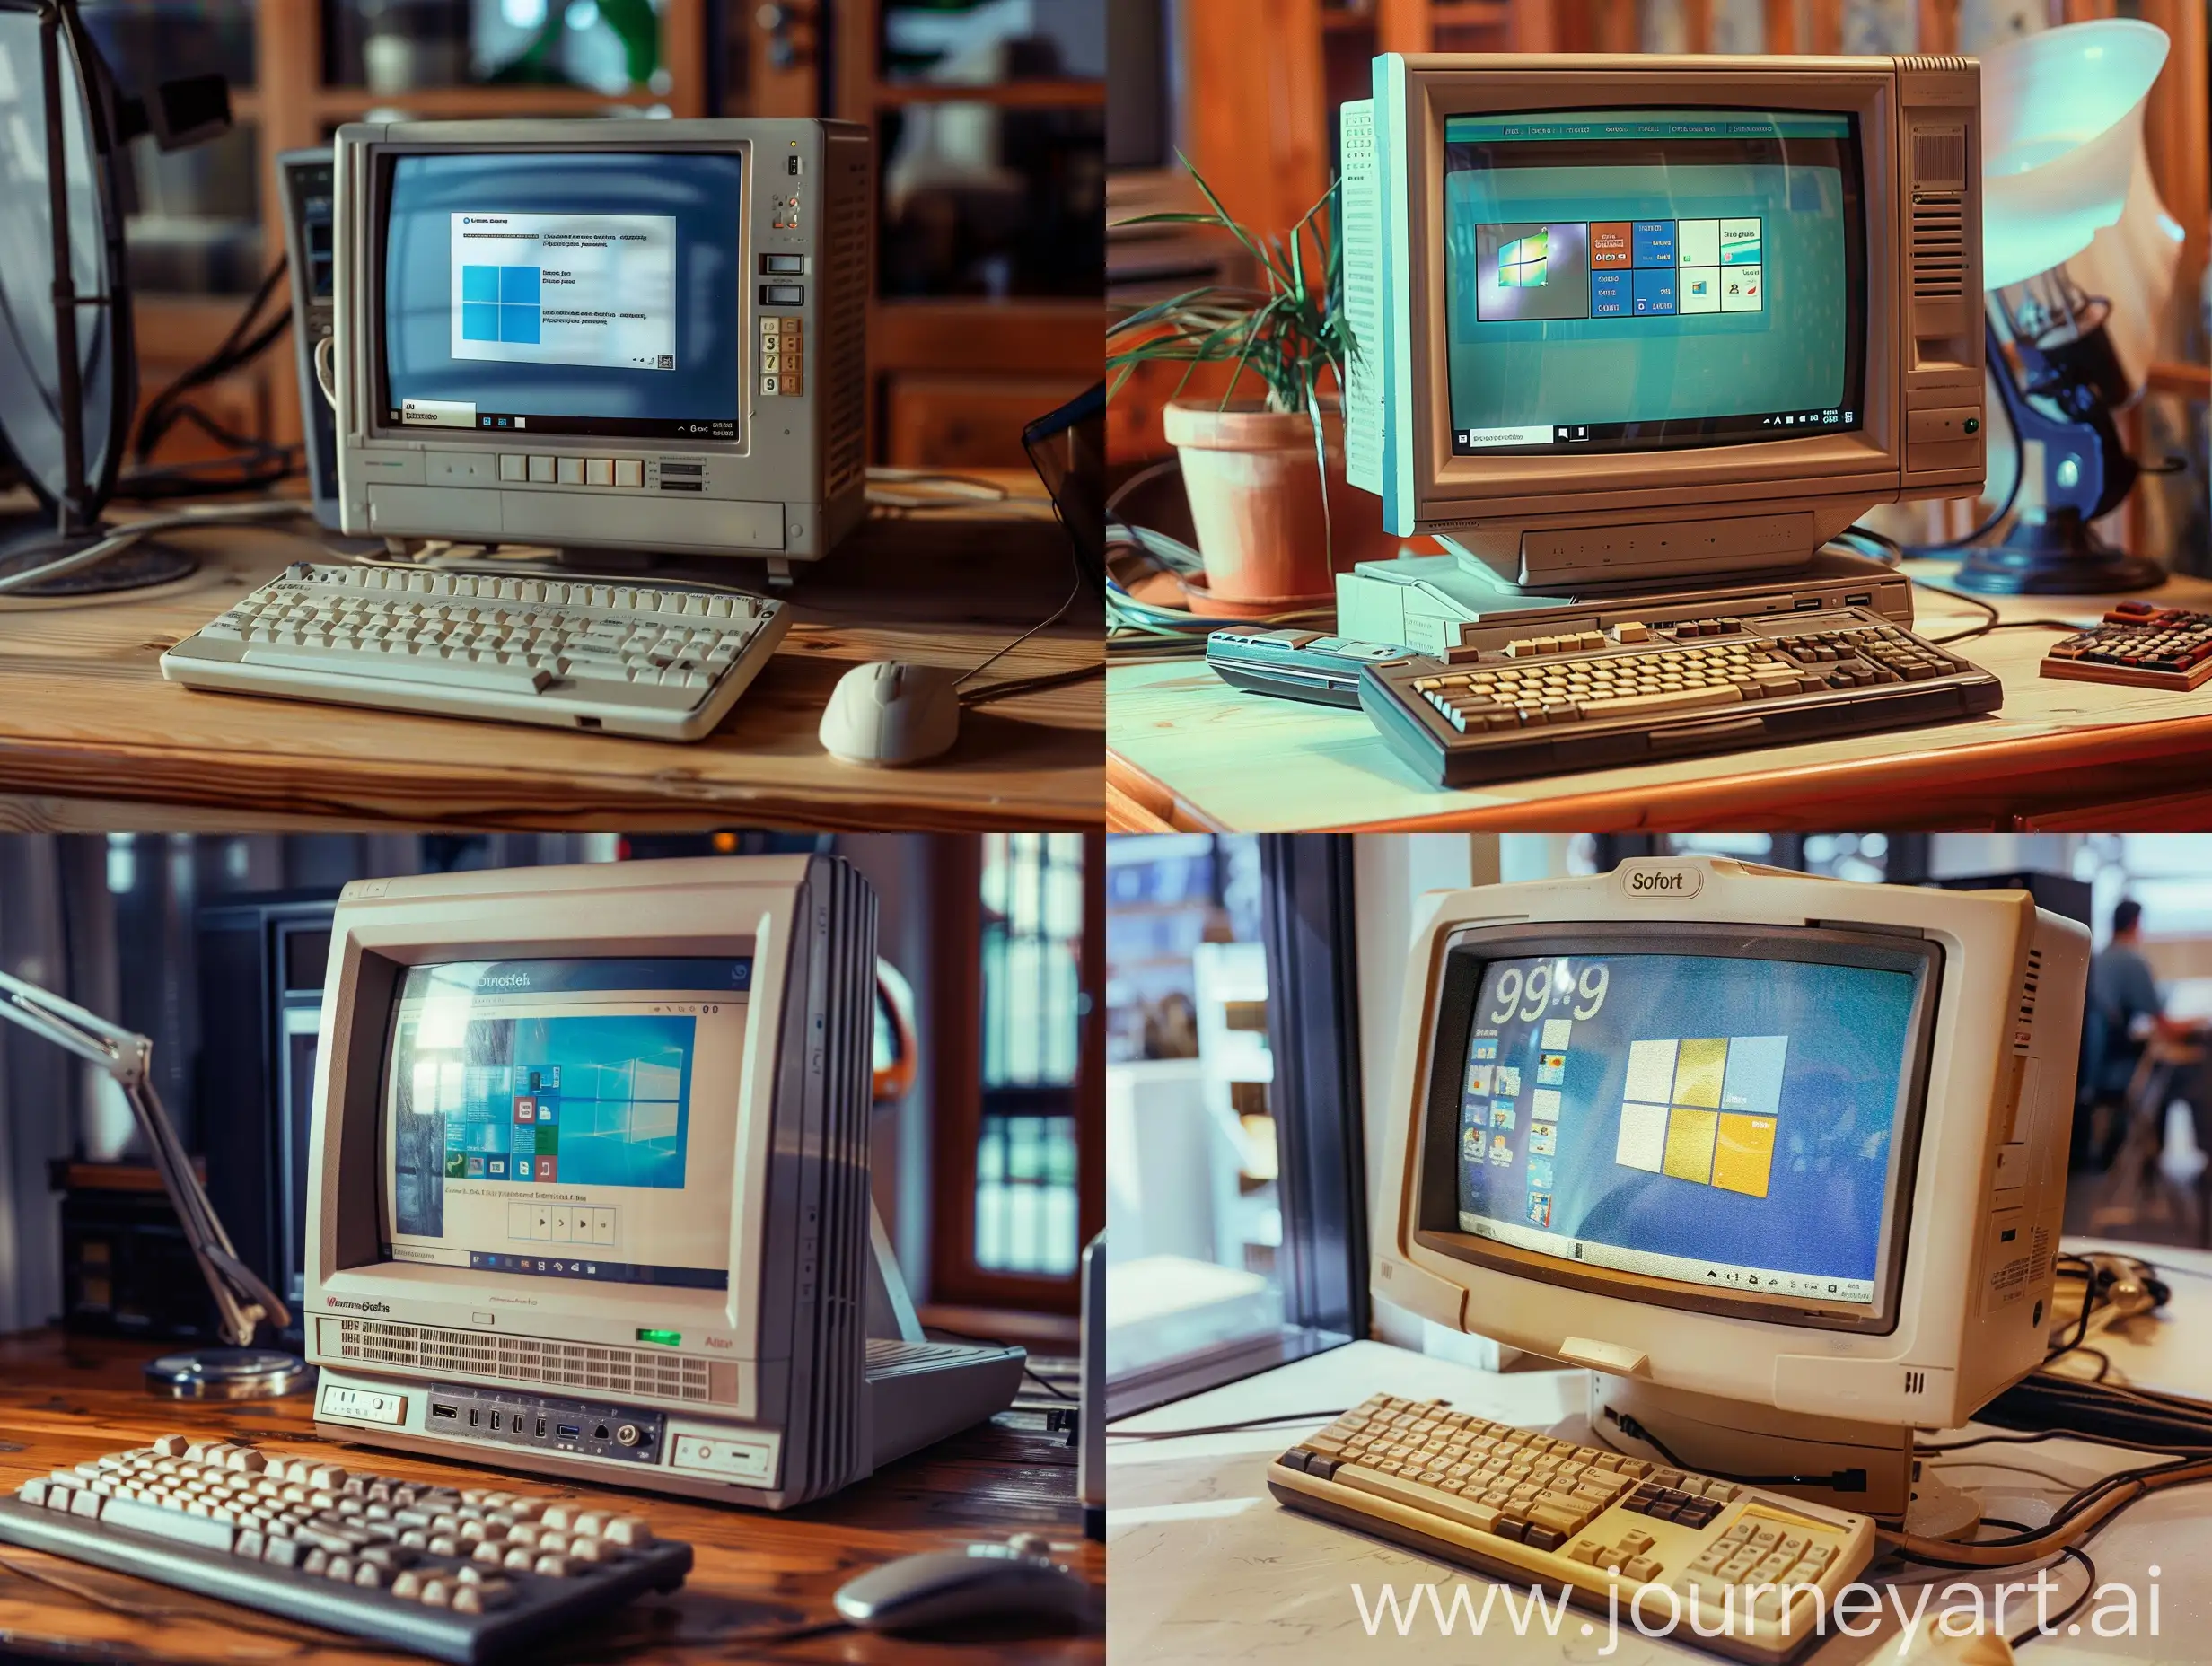 Vintage-Windows-98-Computer-on-Old-Film-Grain-Photo